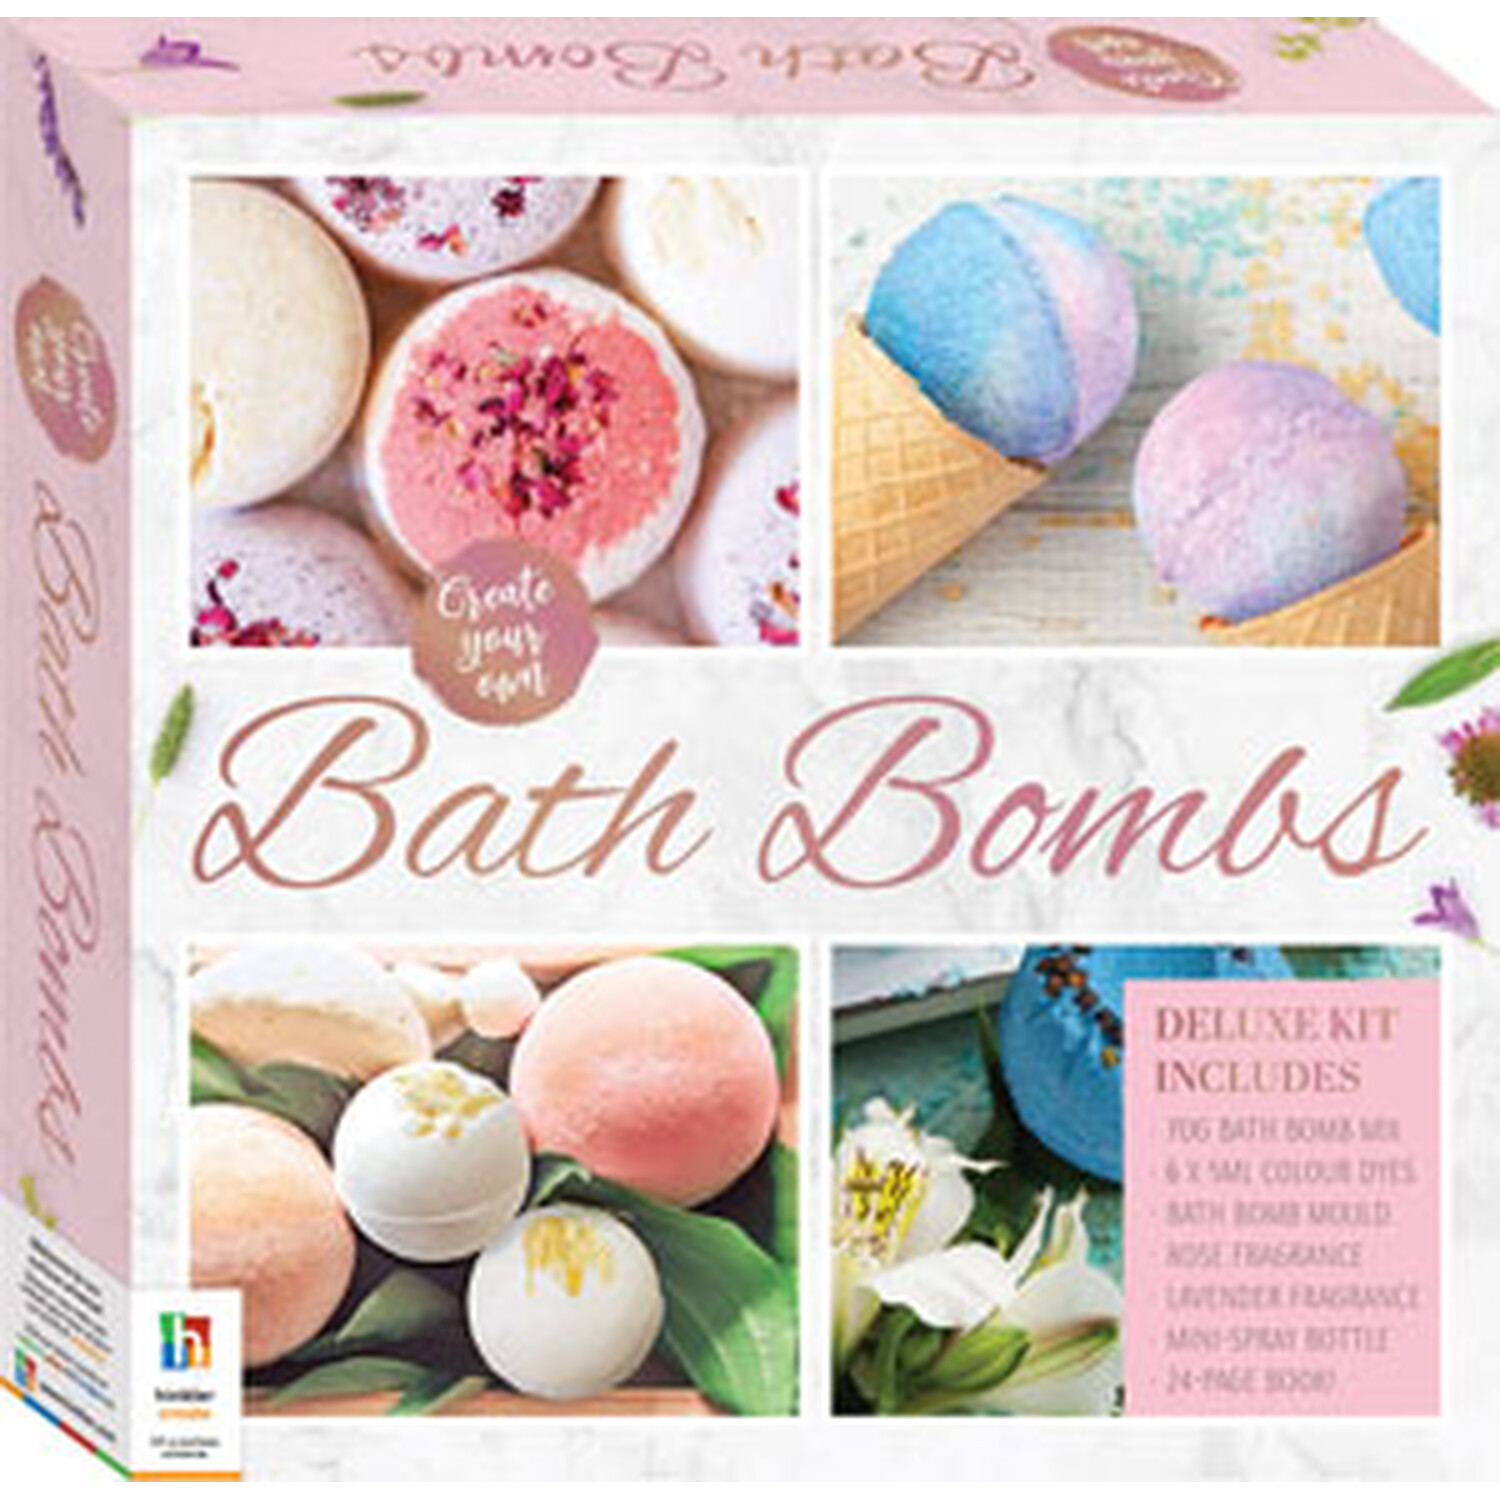 Hinkler Make Your Bath Bombs Kit Image